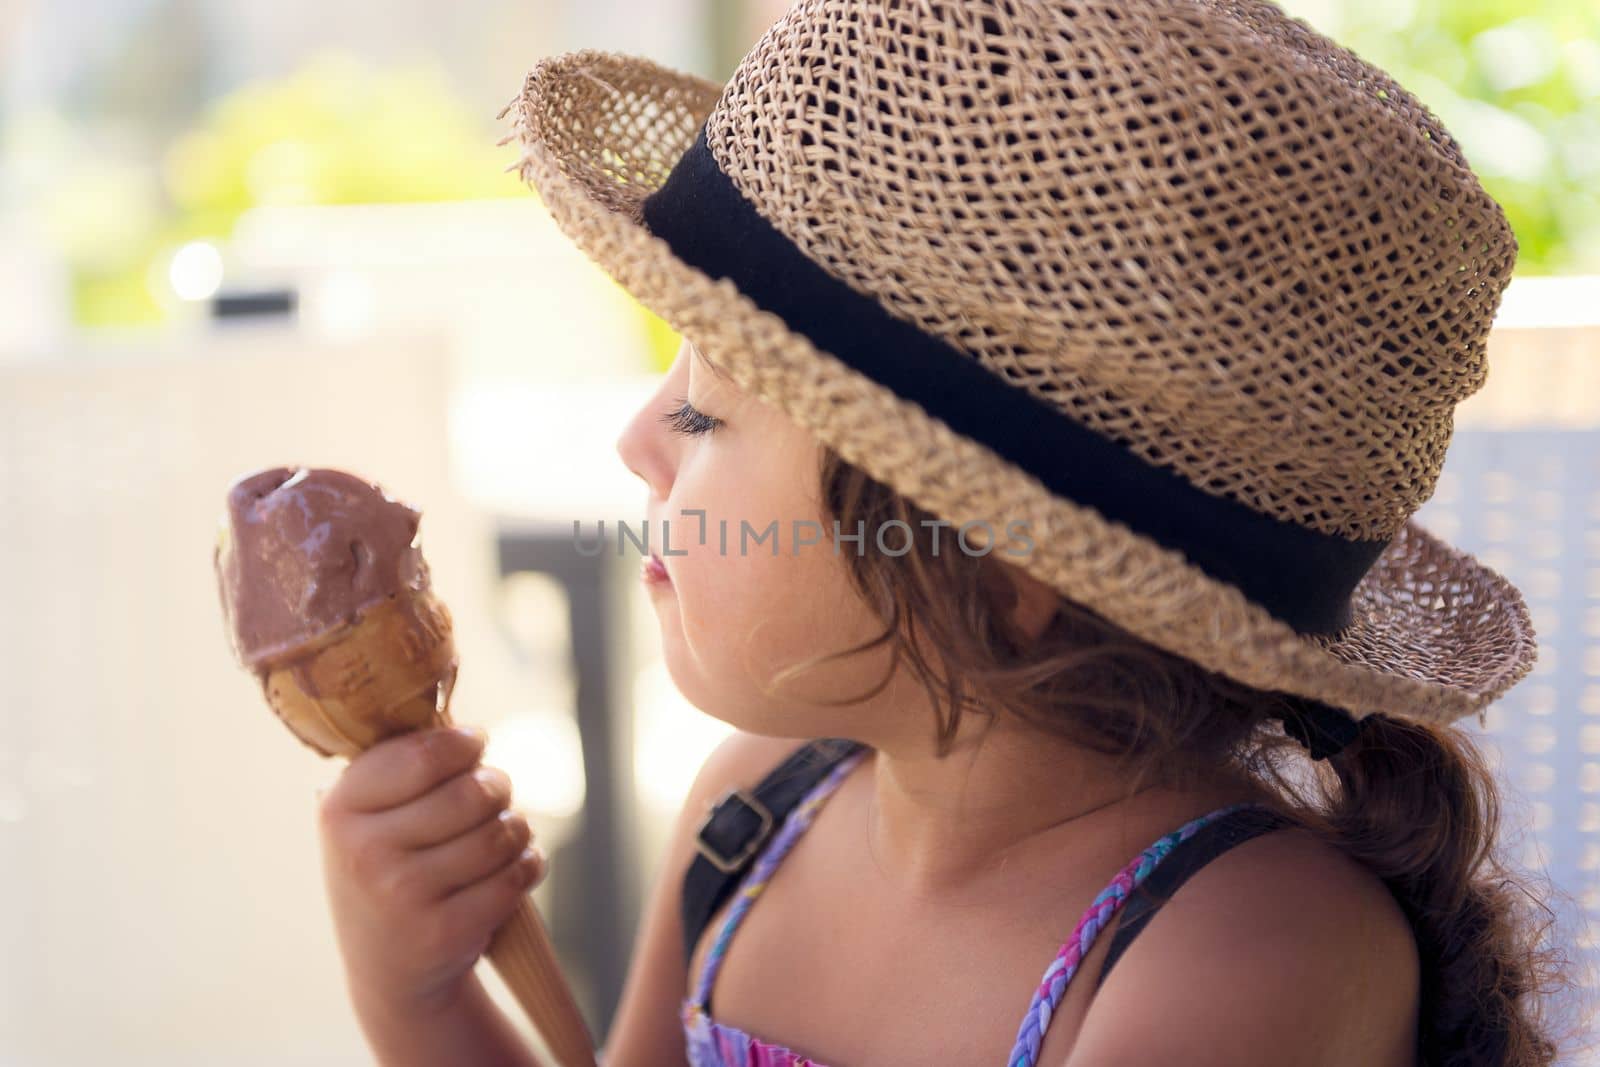 Little girl eating an ice cream cone at summer by raulmelldo